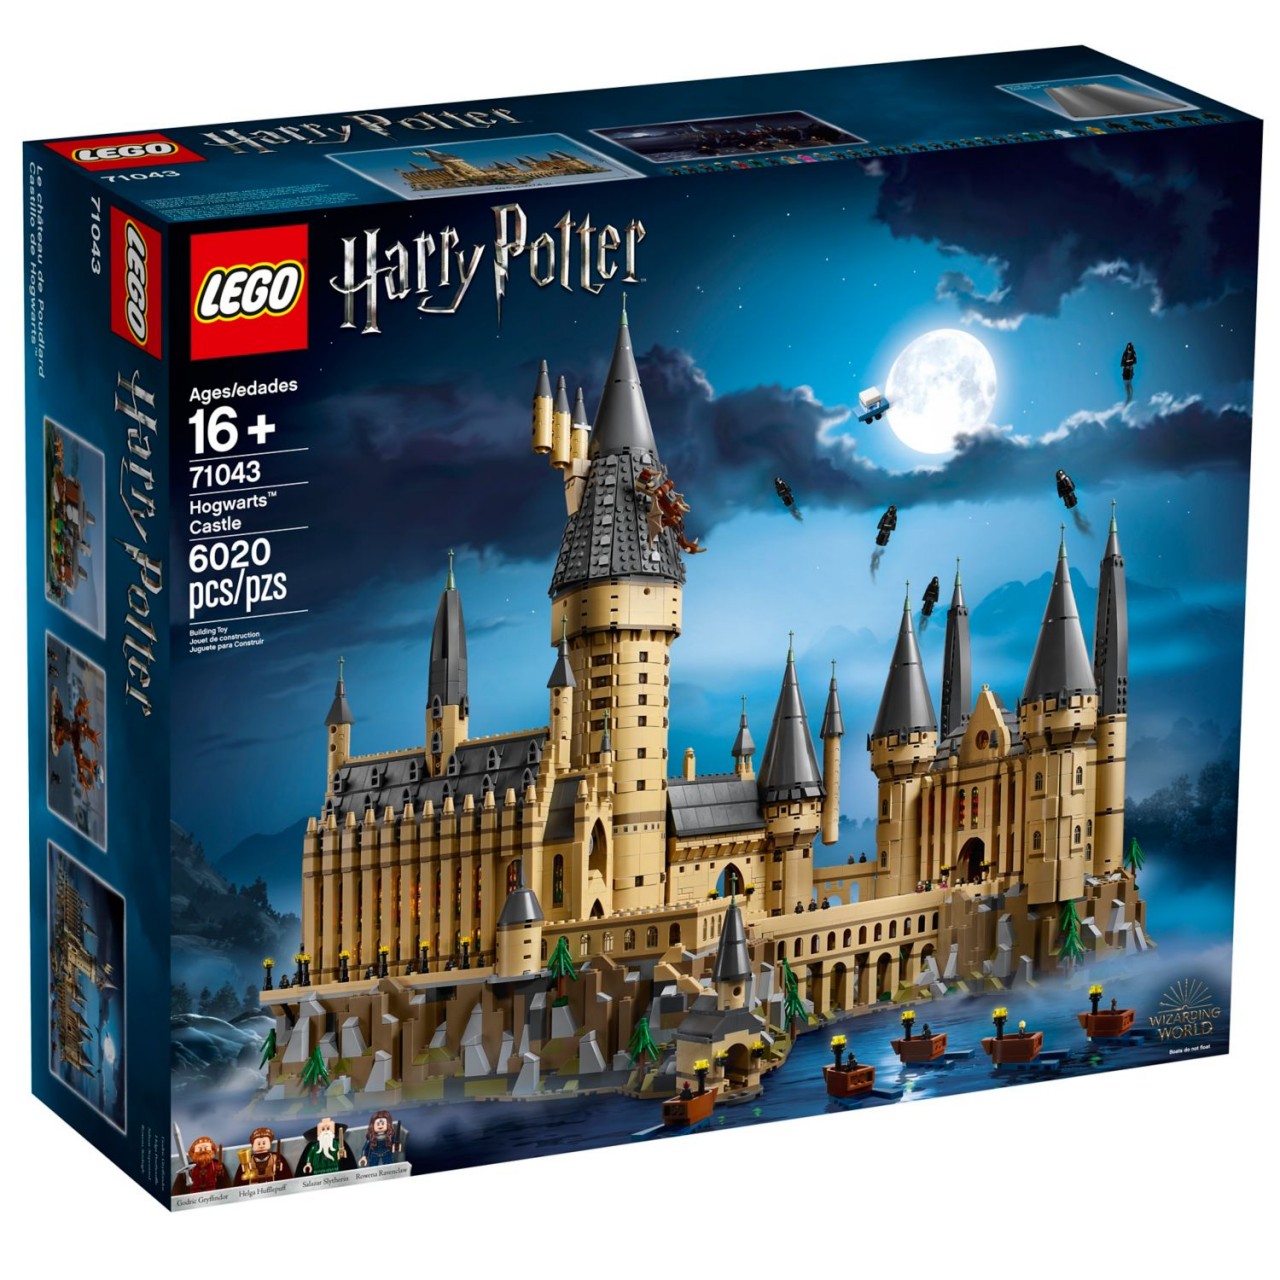 LEGO HARRY POTTER 71043 Schloss Hogwarts